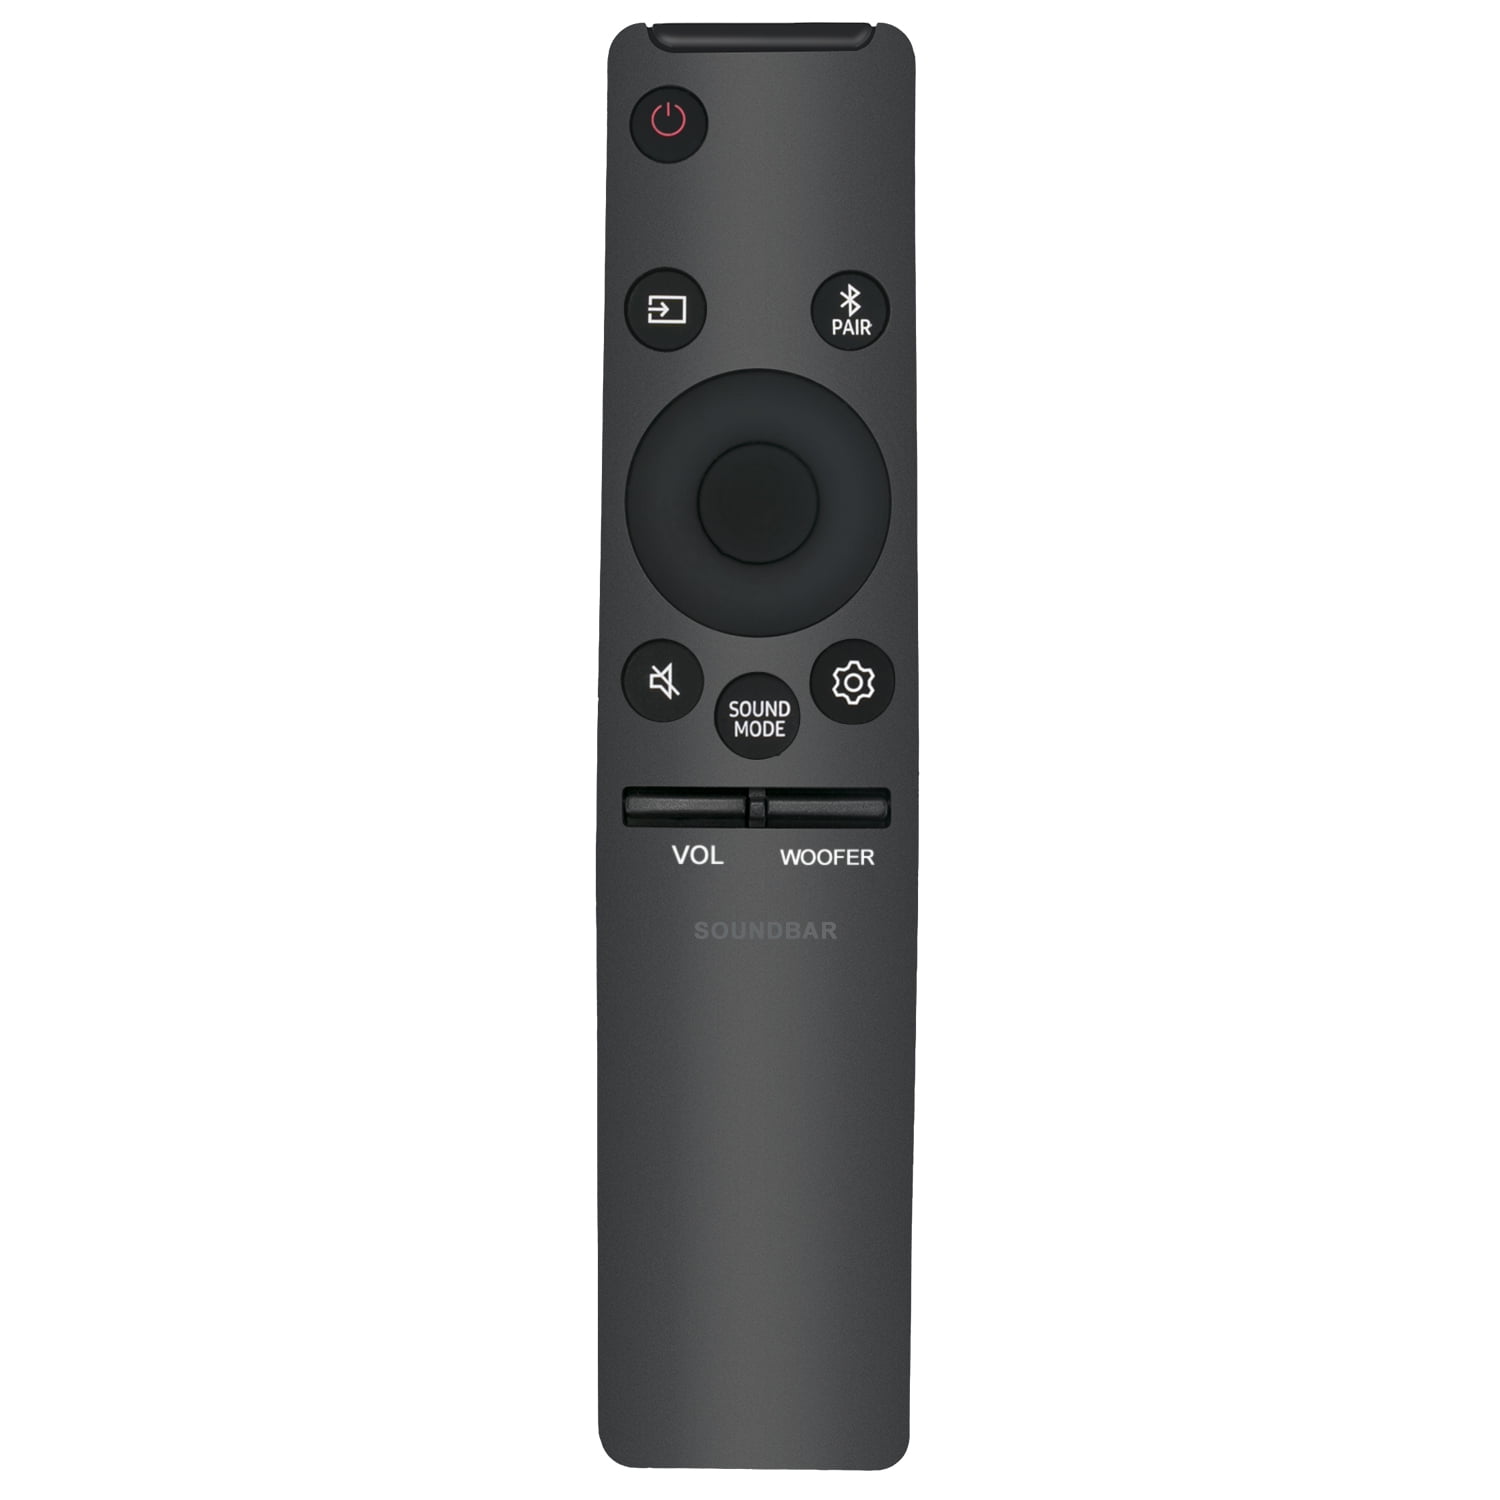 romanforfatter flod Presenter New AH81-09773A Replaced Remote Control fit for Samsung Soundbar HW-Q6CR/ZA  HW-Q60R/ZG HW-Q60R/XY HWQ6CR HWQ60R - Walmart.com